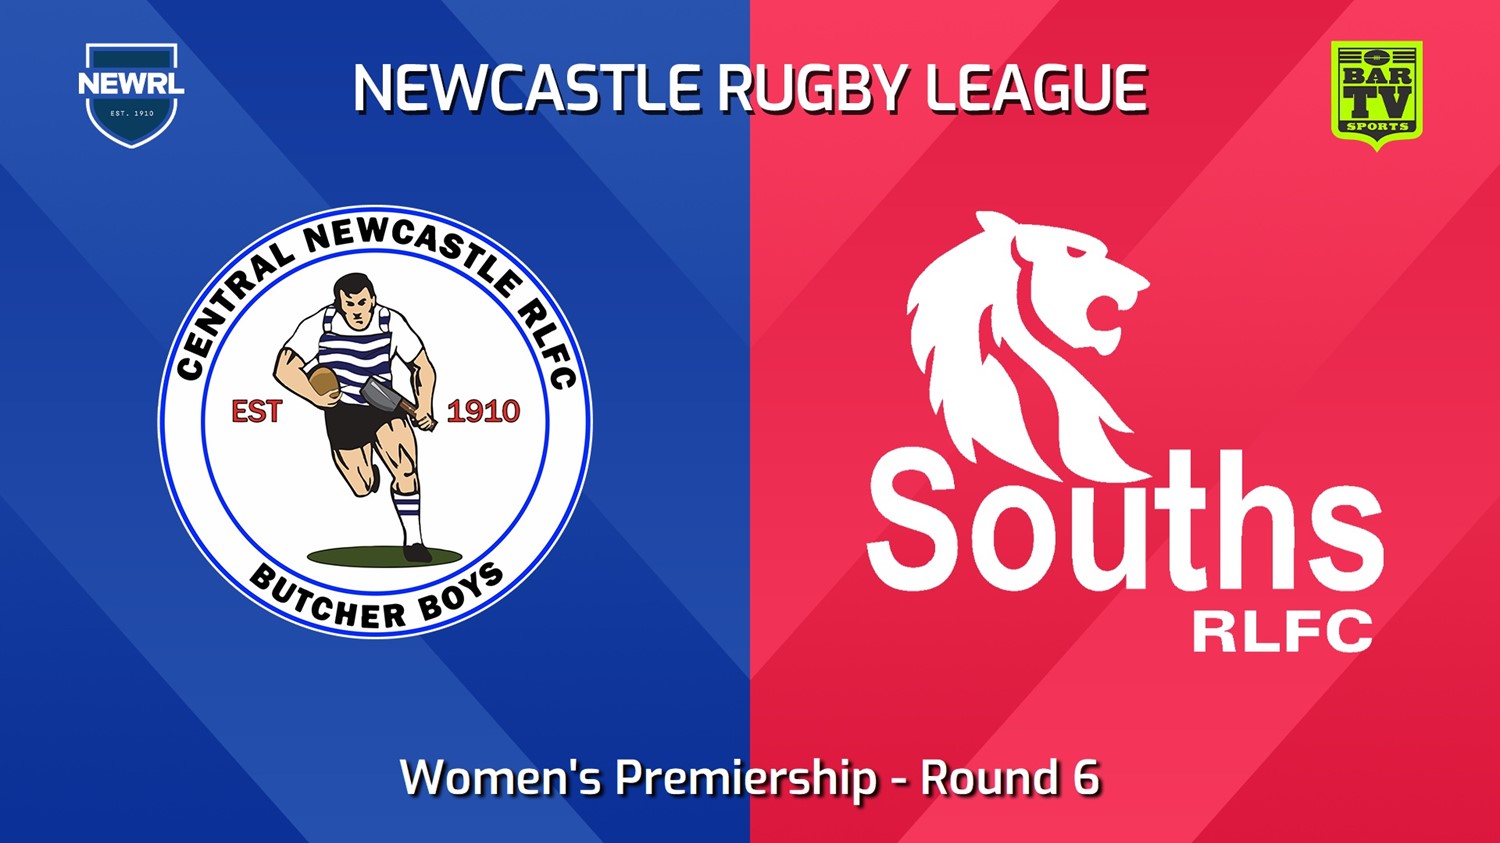 240612-video-Newcastle RL Round 6 - Women's Premiership - Central Newcastle Butcher Boys v South Newcastle Lions Slate Image